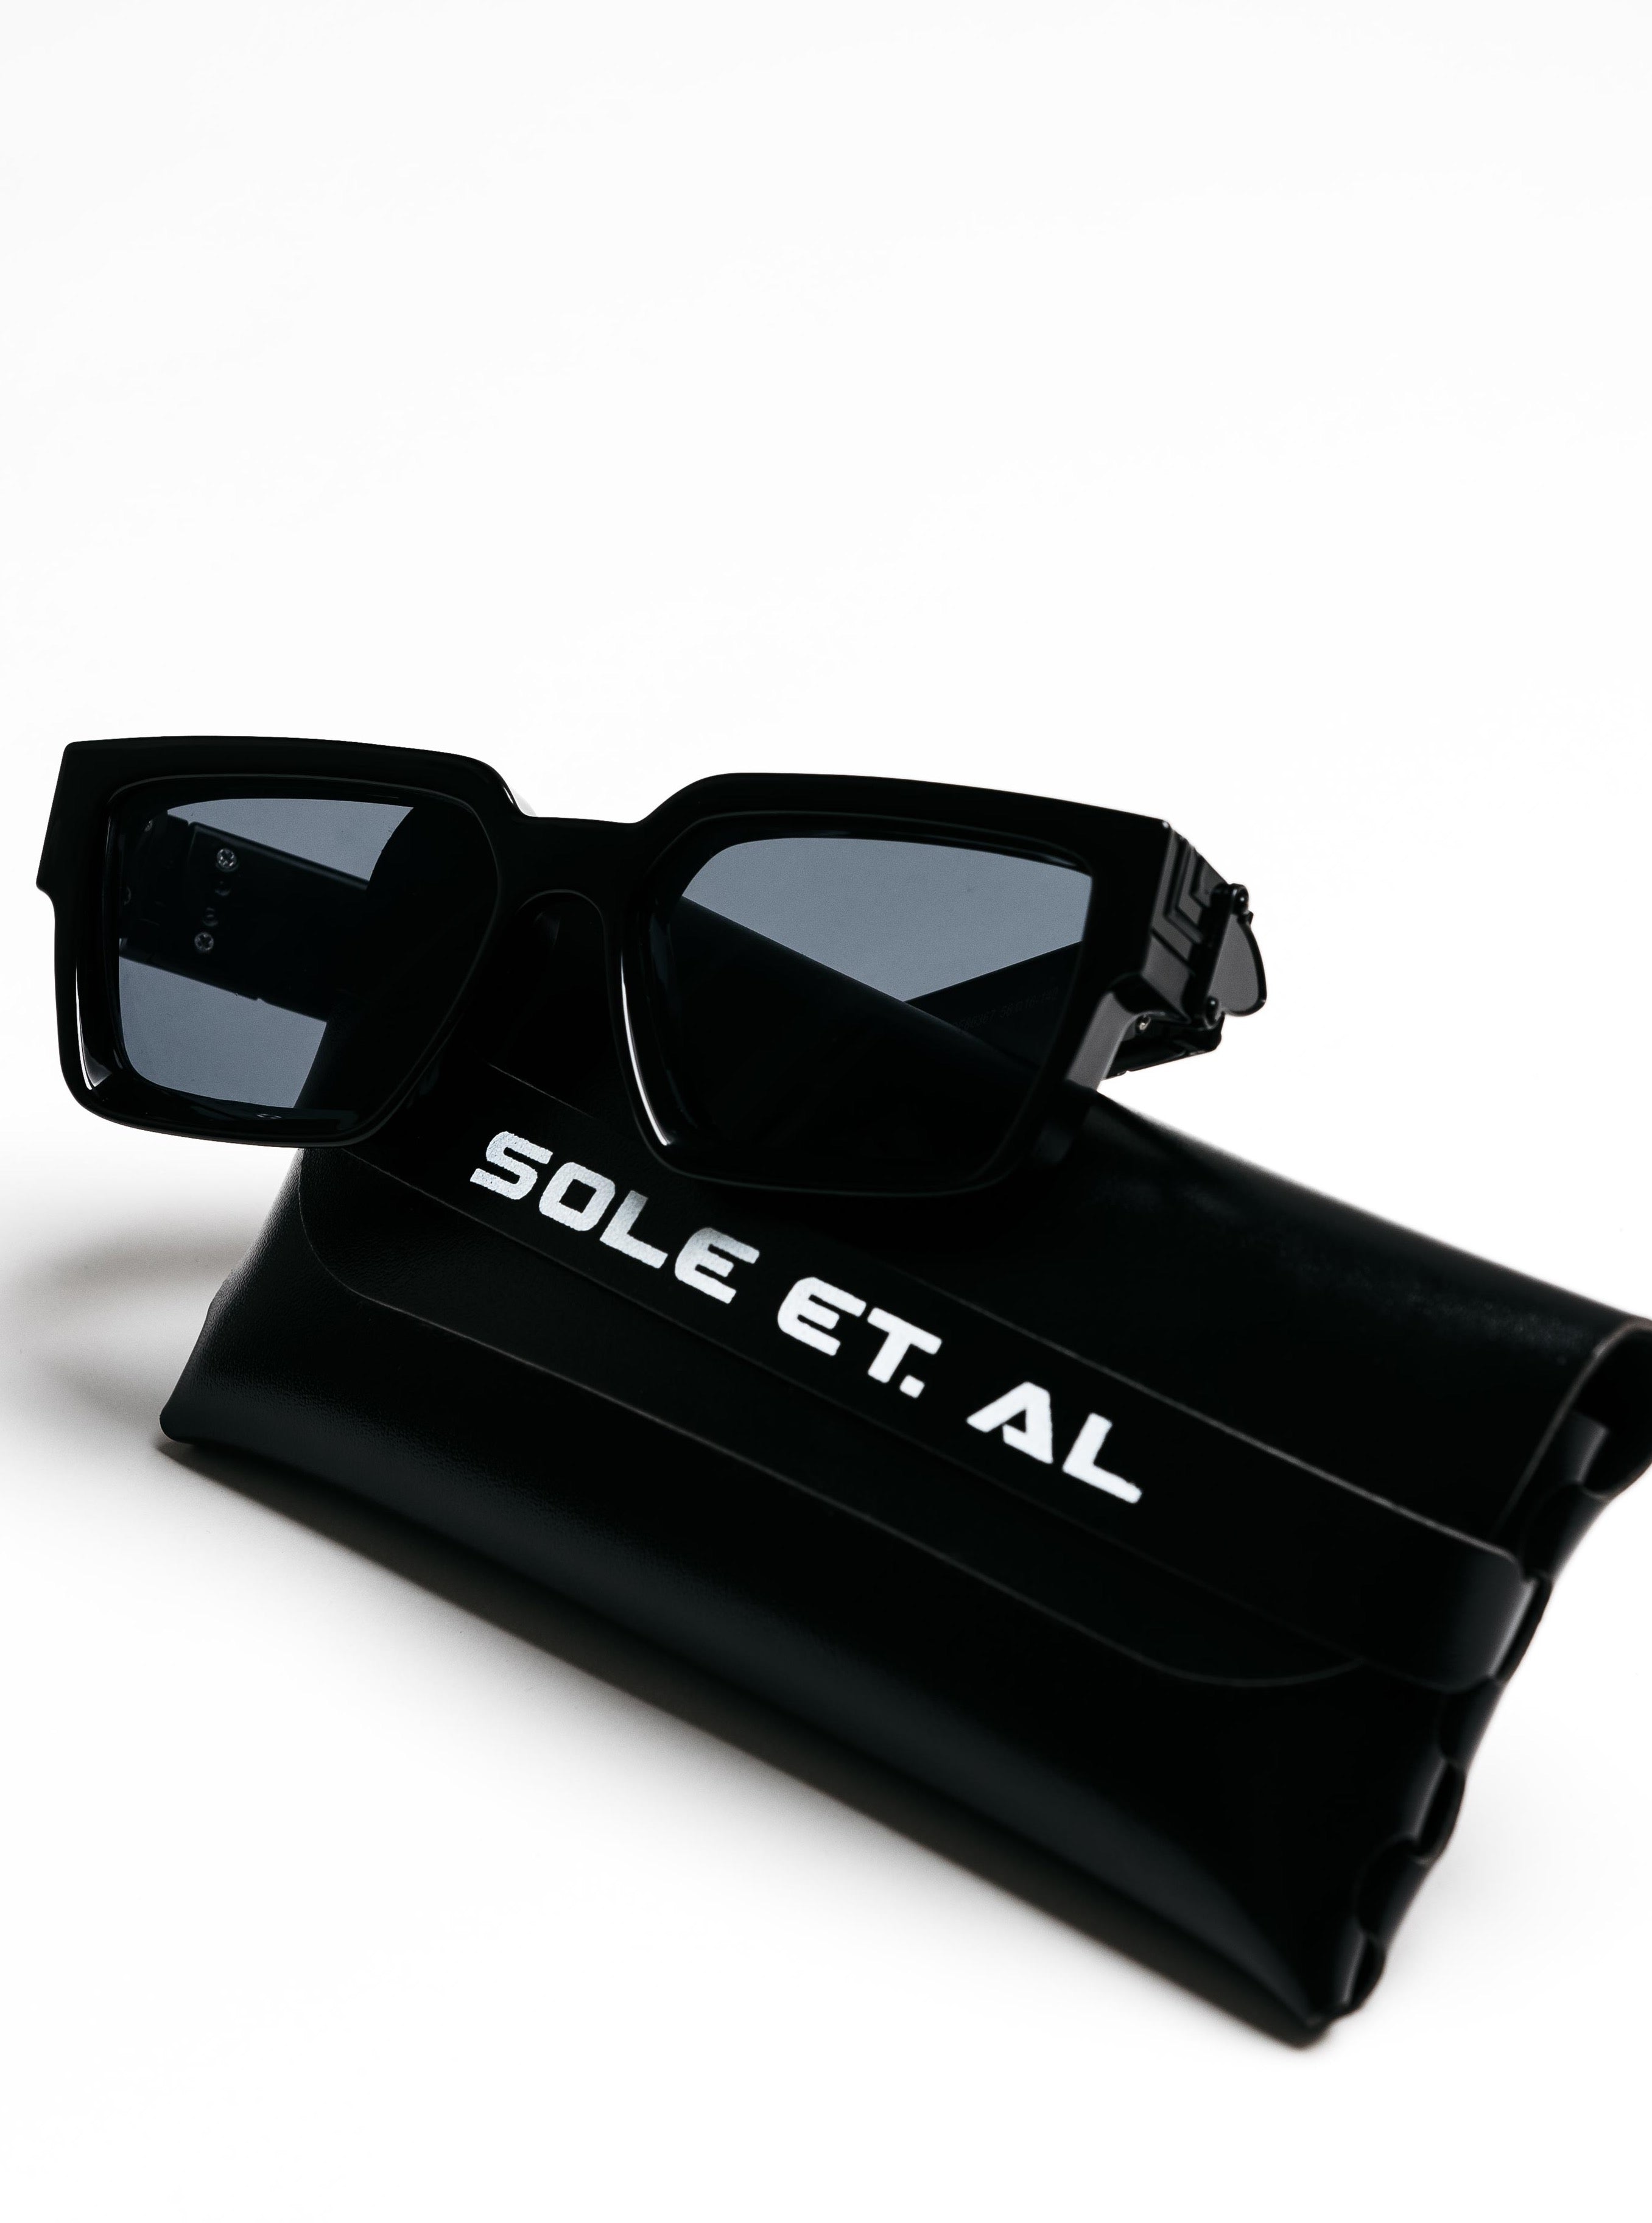 Sole et. Al Instinct Glasses : All Black